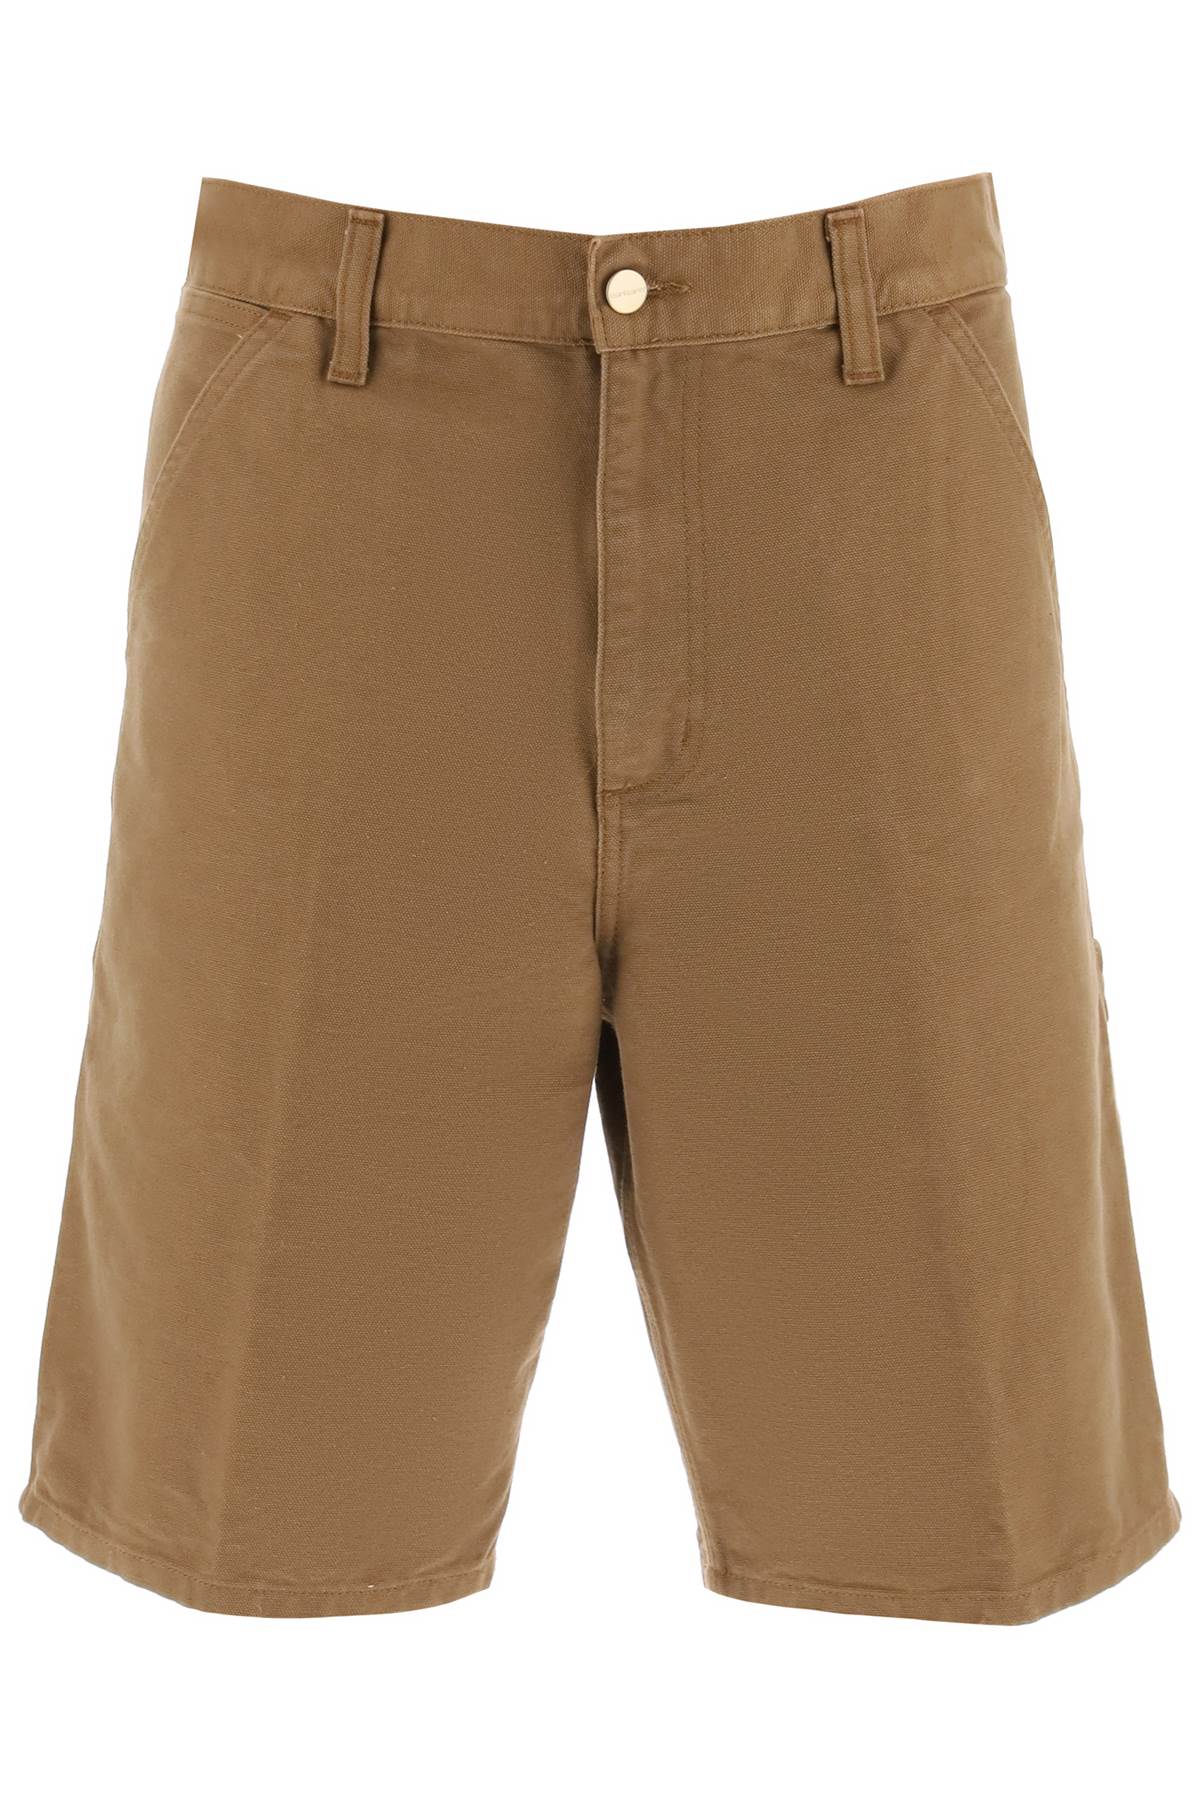 Carhartt wip organic cotton shorts-0